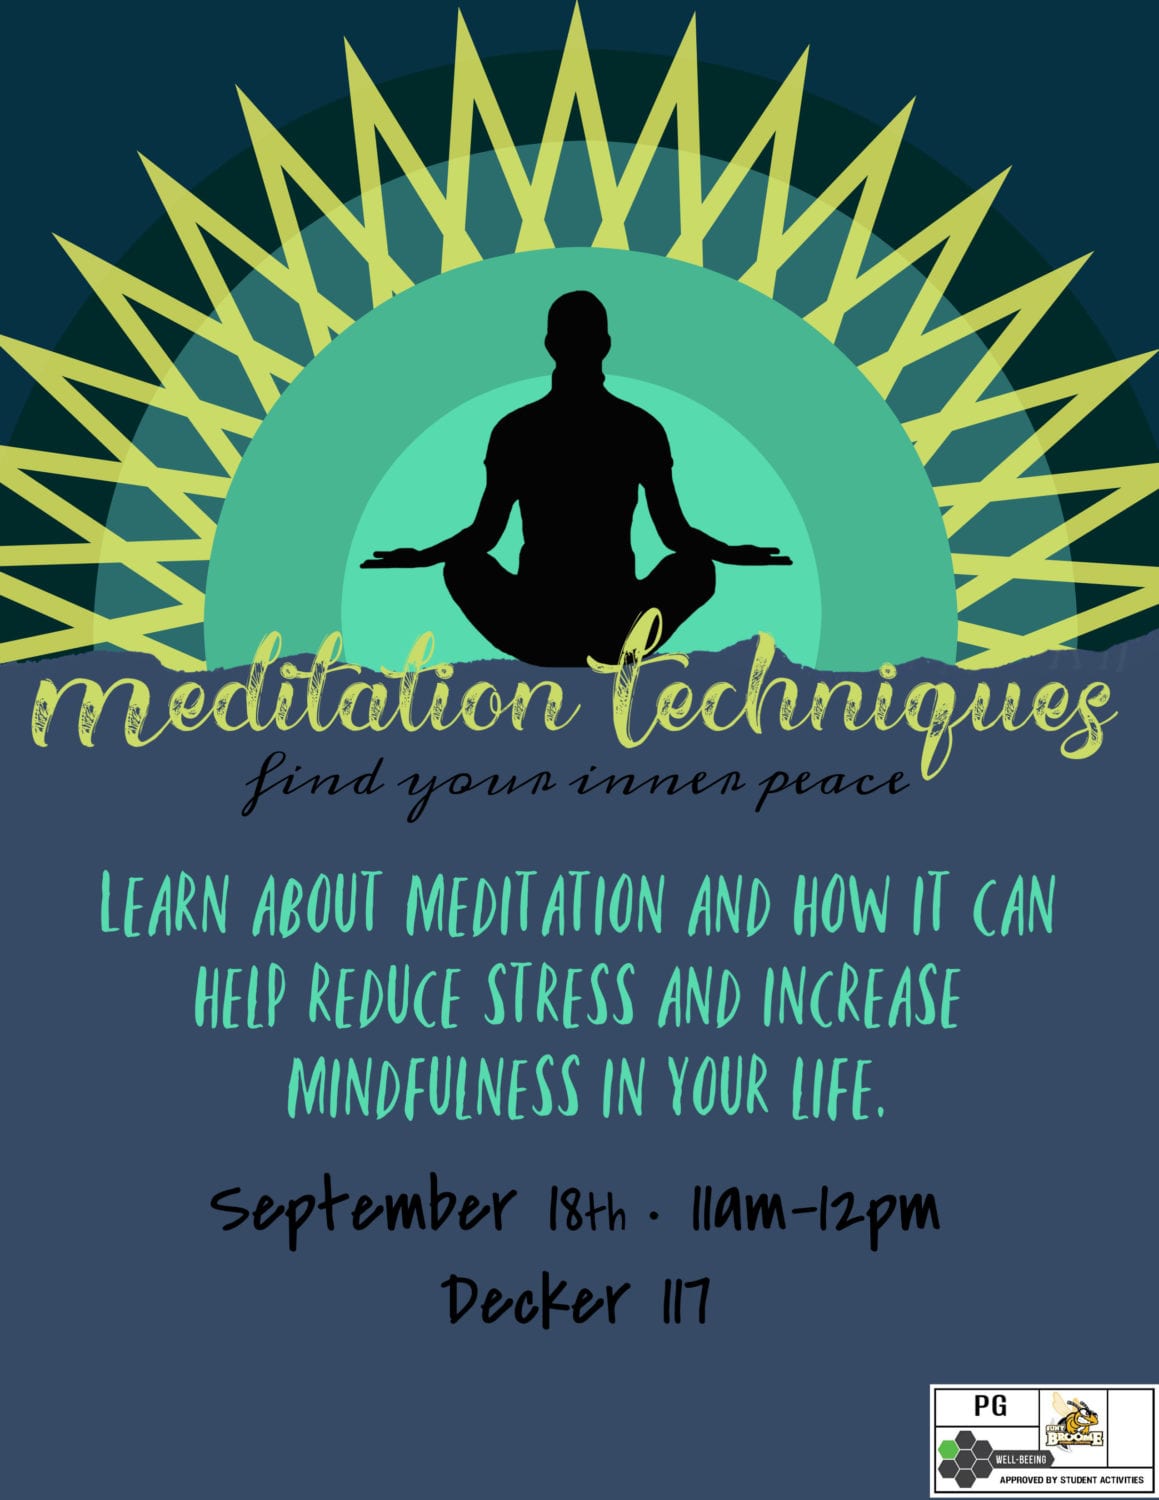 Go Om: Learn about meditation on Sept. 18